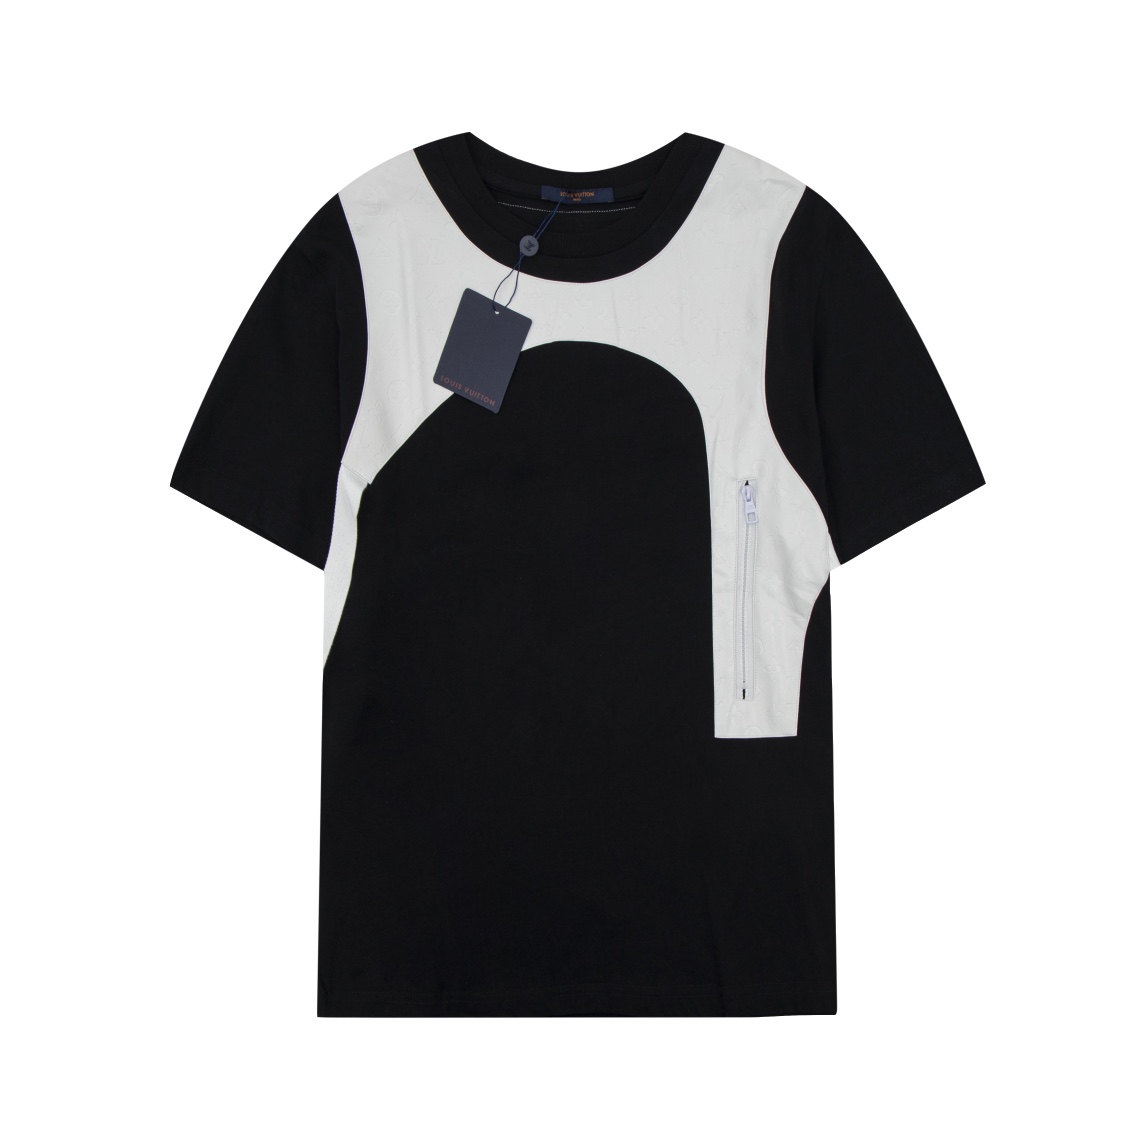 Louis Vuitton Clothing T-Shirt Waistcoat Black White Splicing Cotton Fashion Short Sleeve